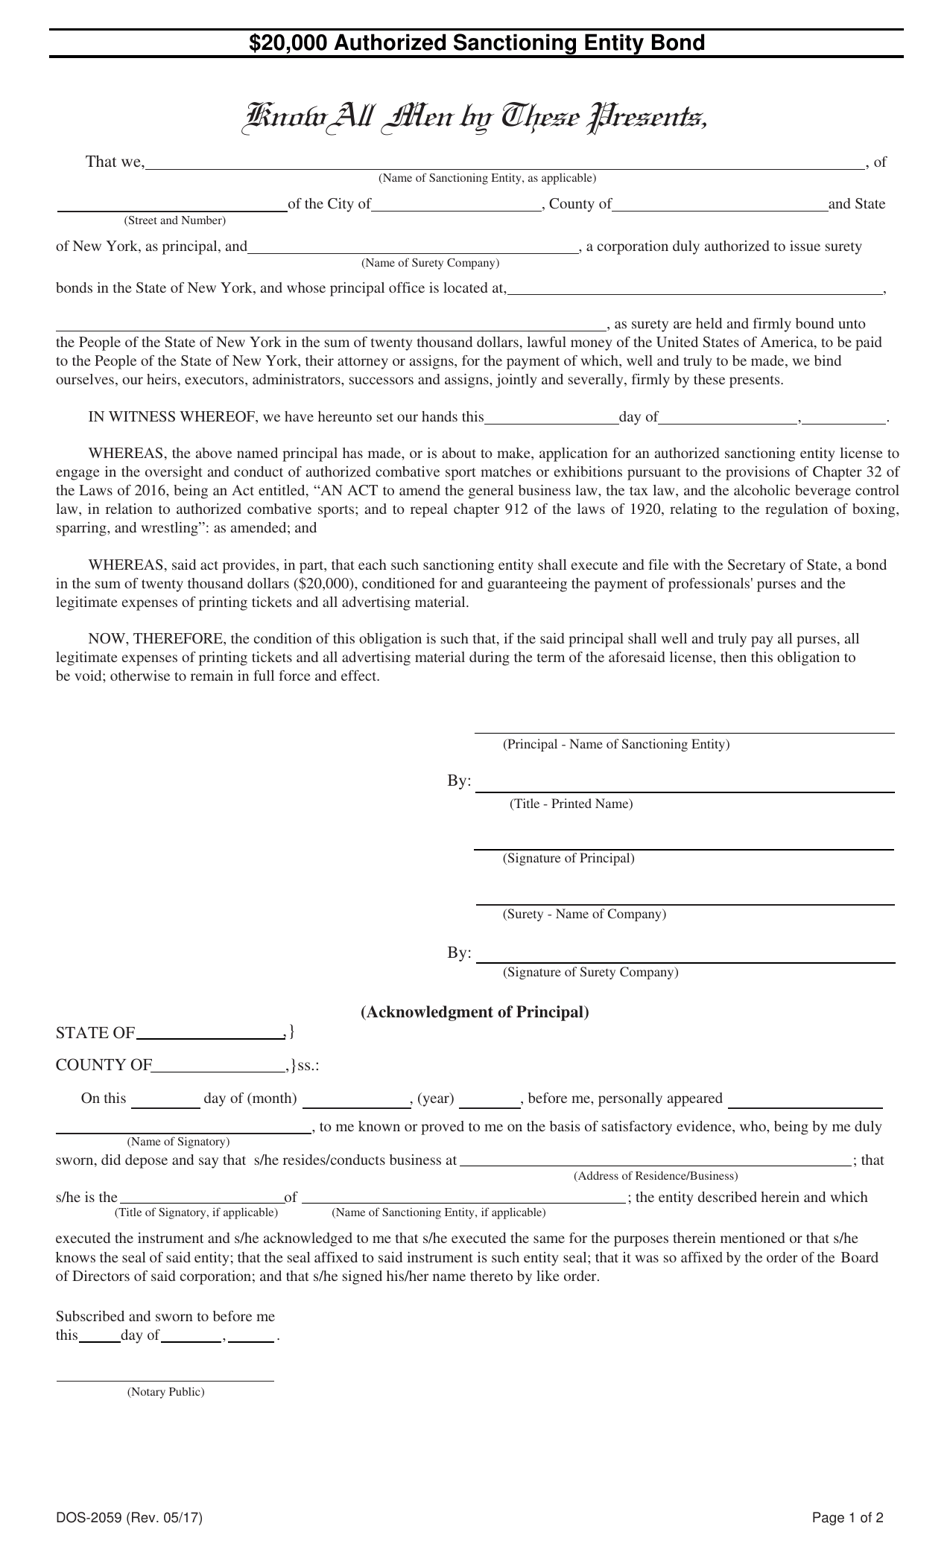 Form DOS-2059 $20,000 Authorized Sanctioning Entity Bond - New York, Page 1